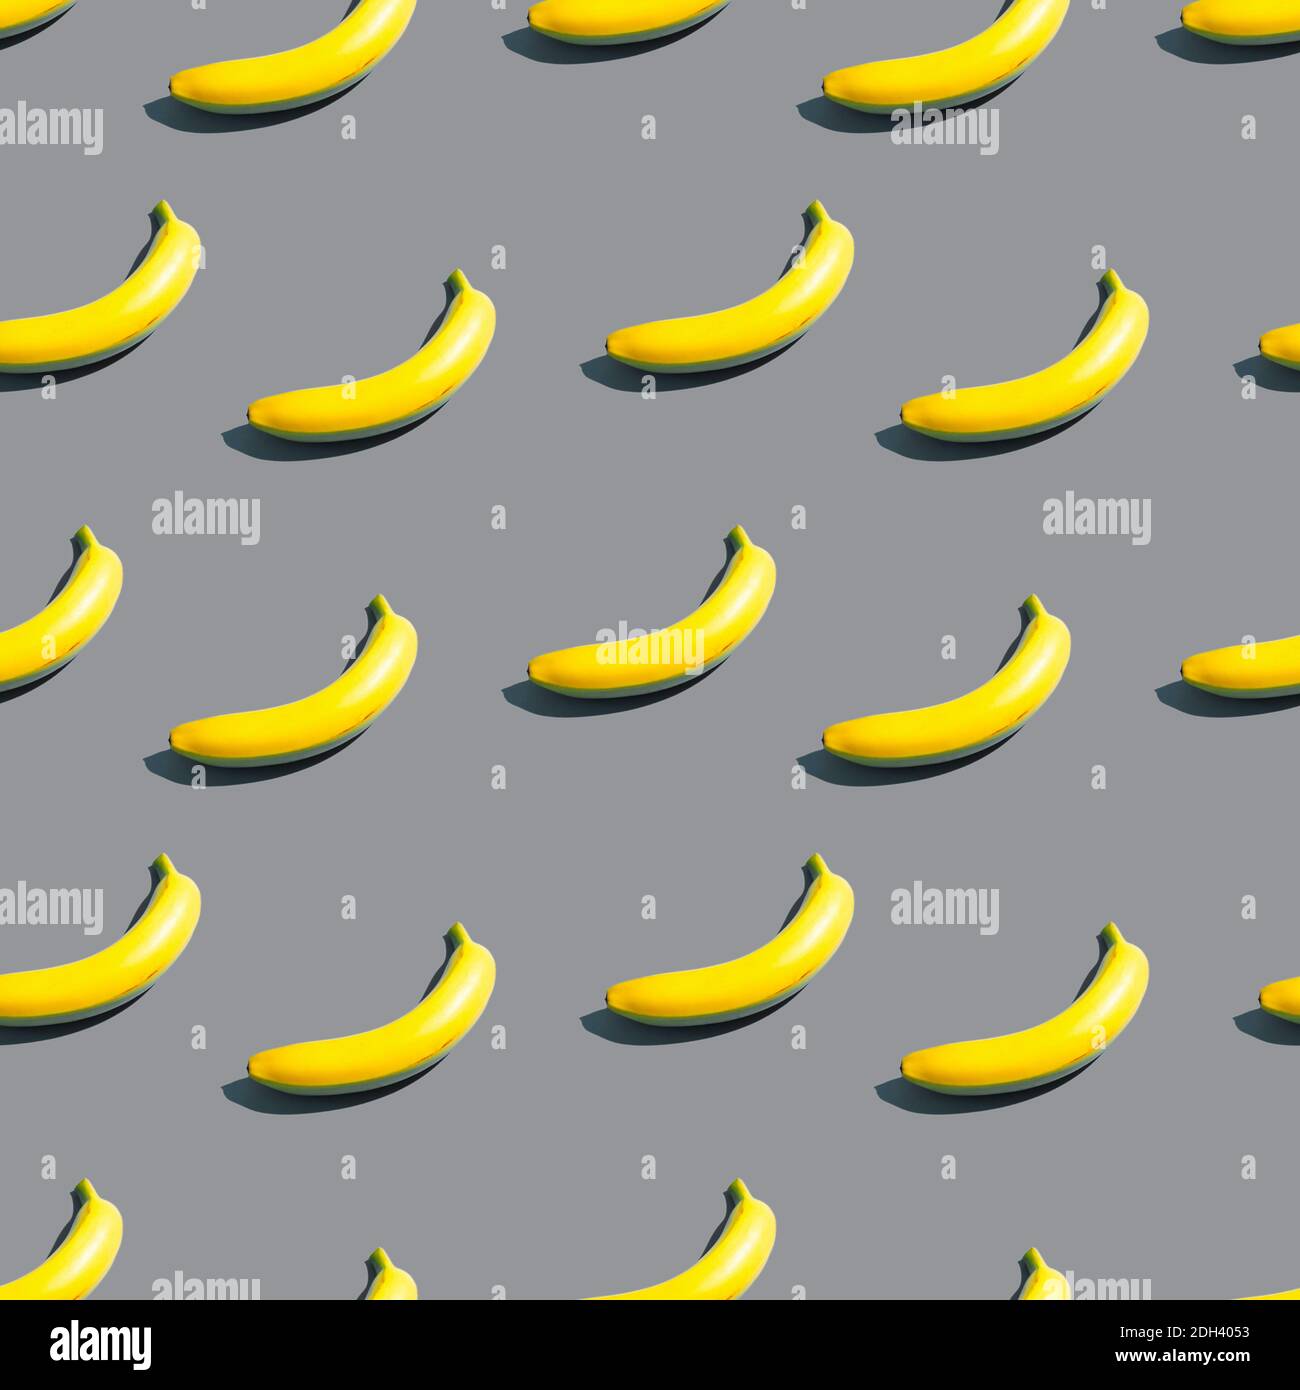 Banana wallpaper bananas fotografías e imágenes de alta resolución - Página  10 - Alamy